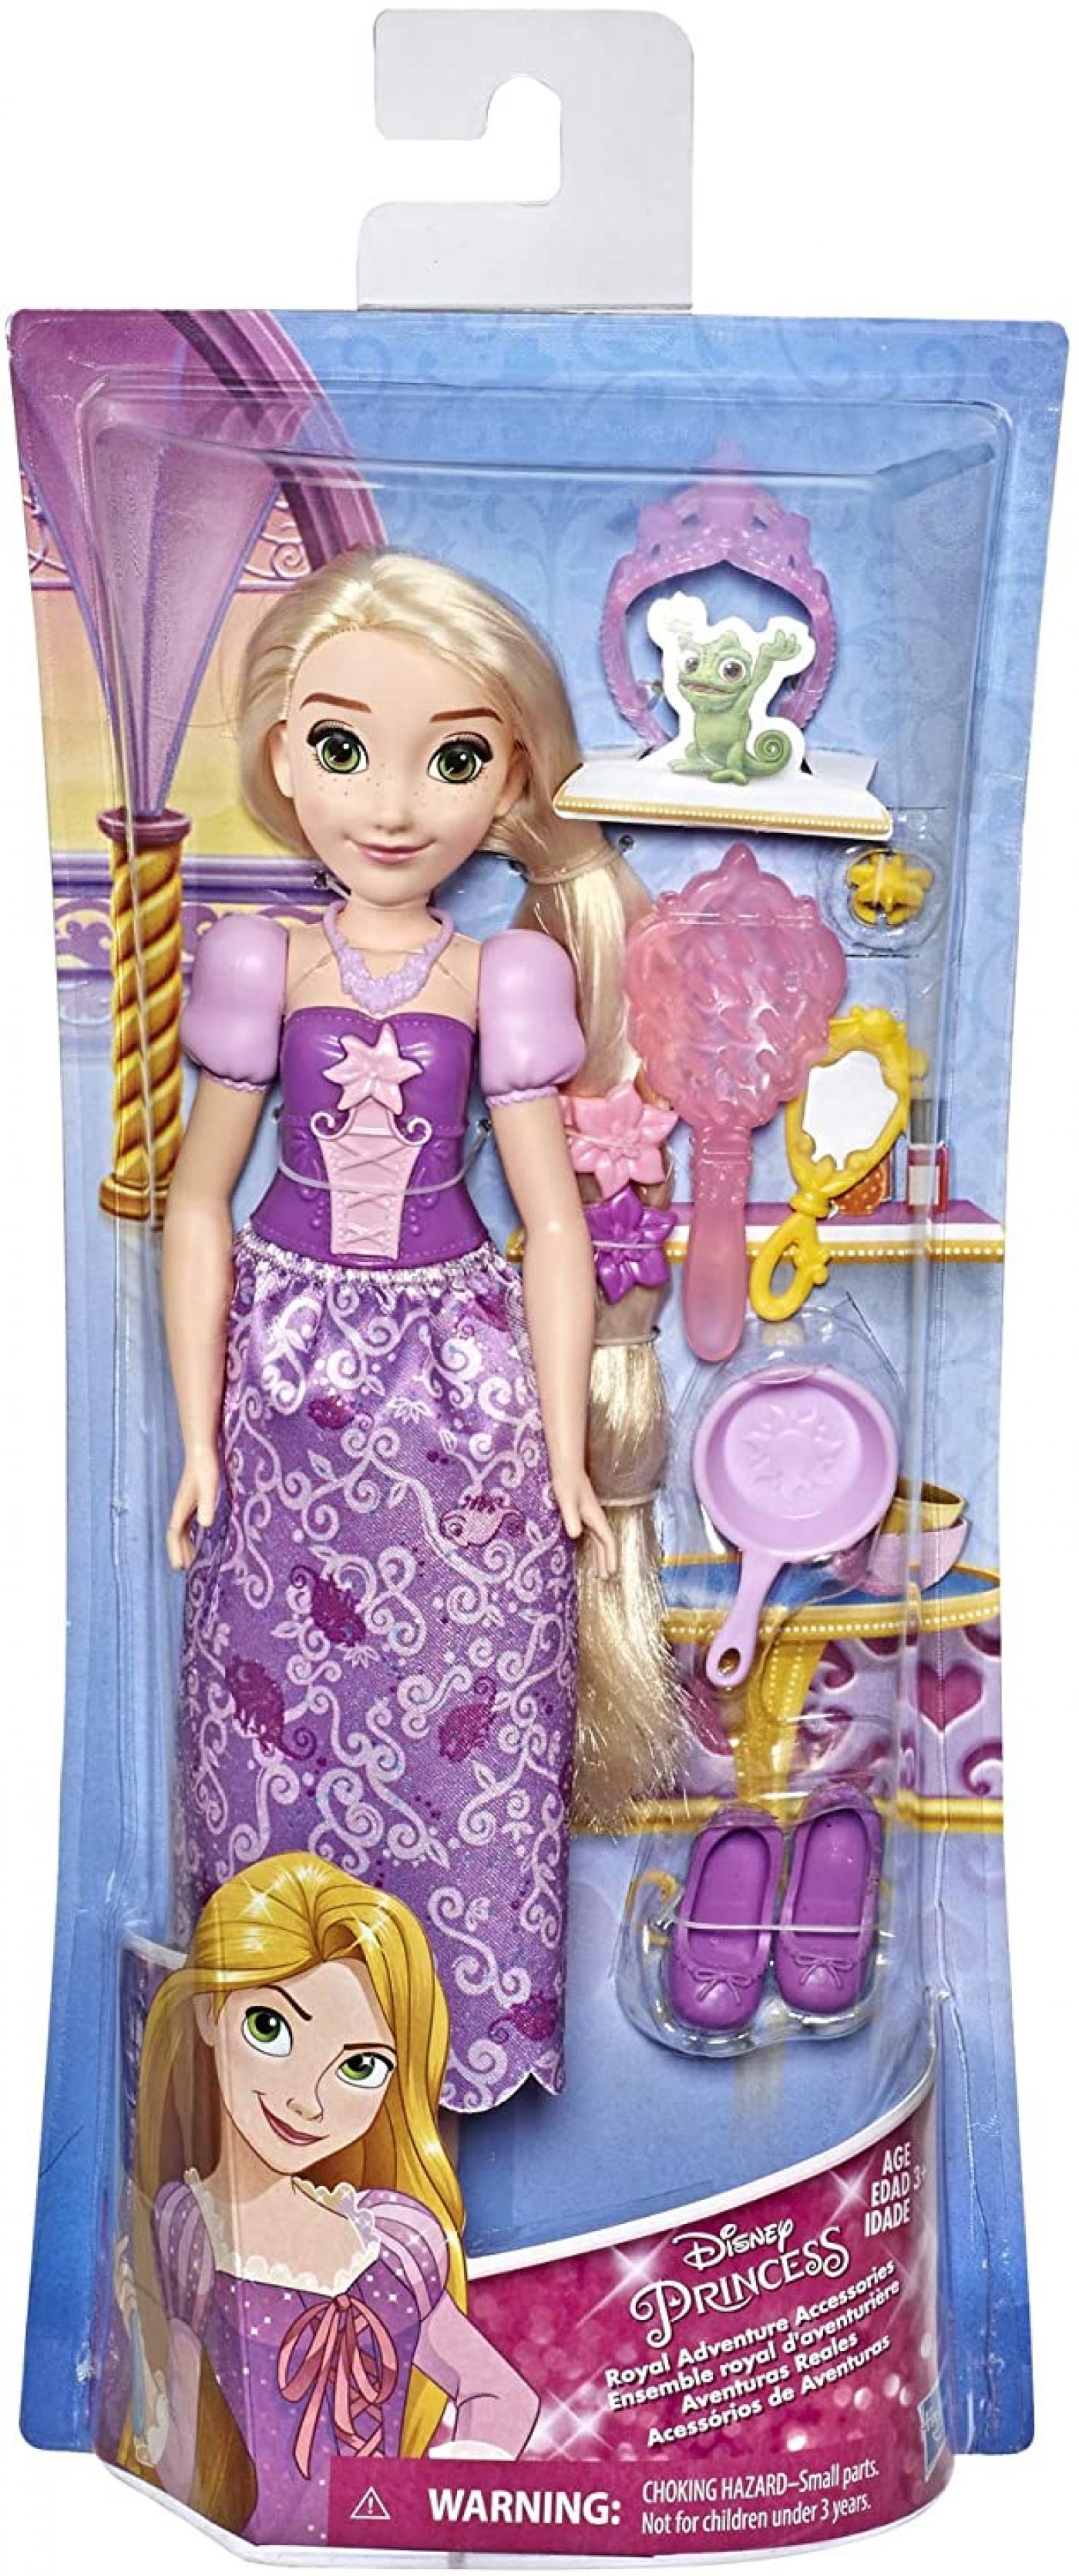 Rapunzel Princesa Disney Original Hasbro